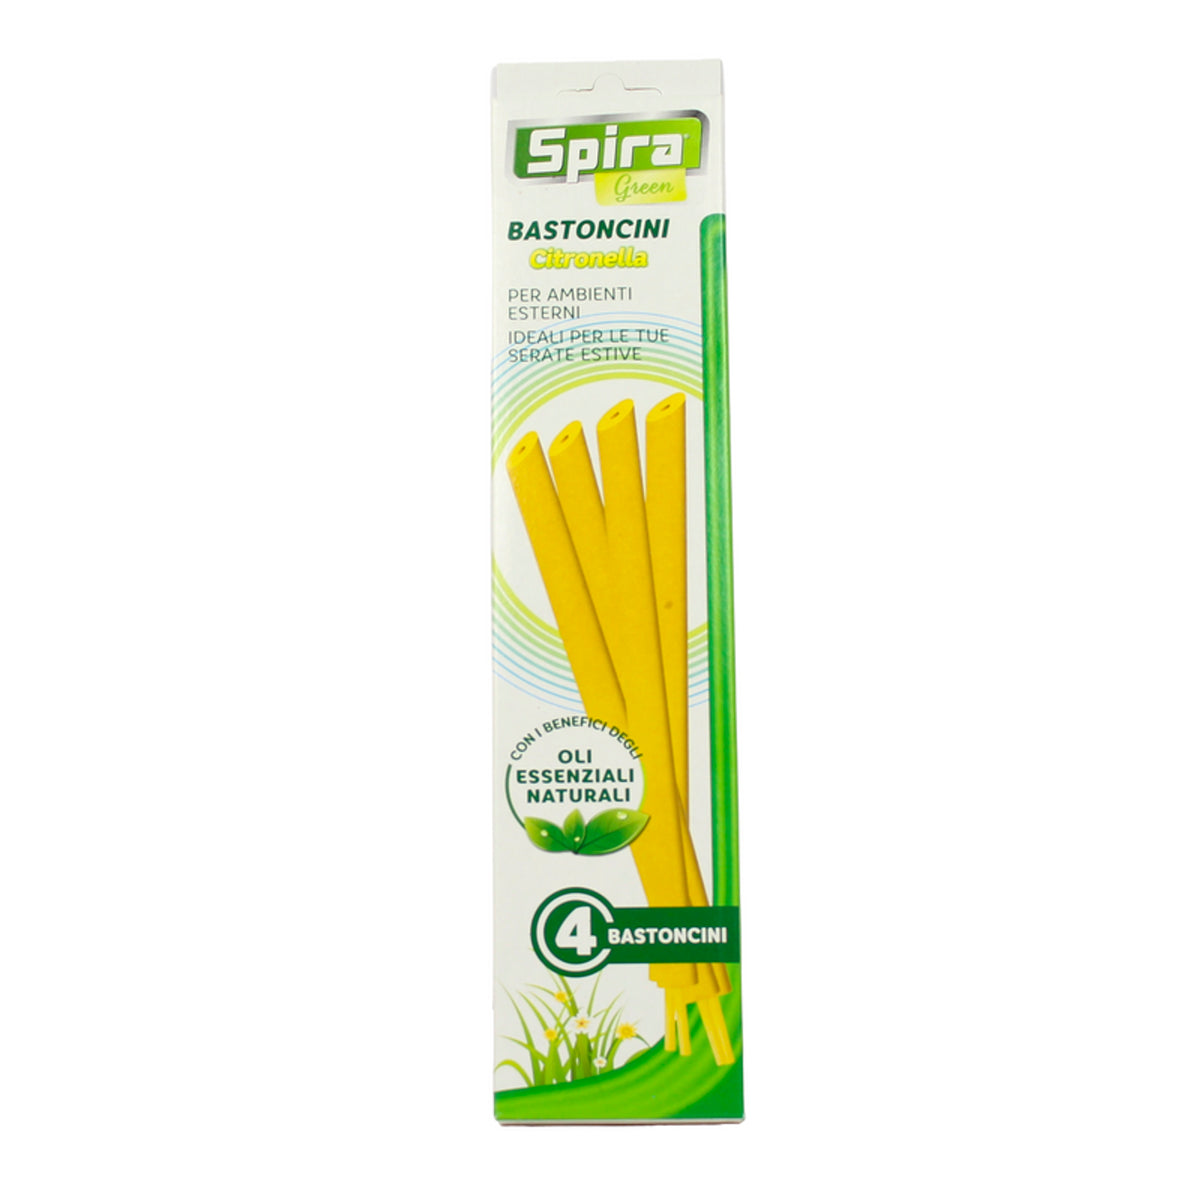 Green Citronella spira 4 sticks for external environments